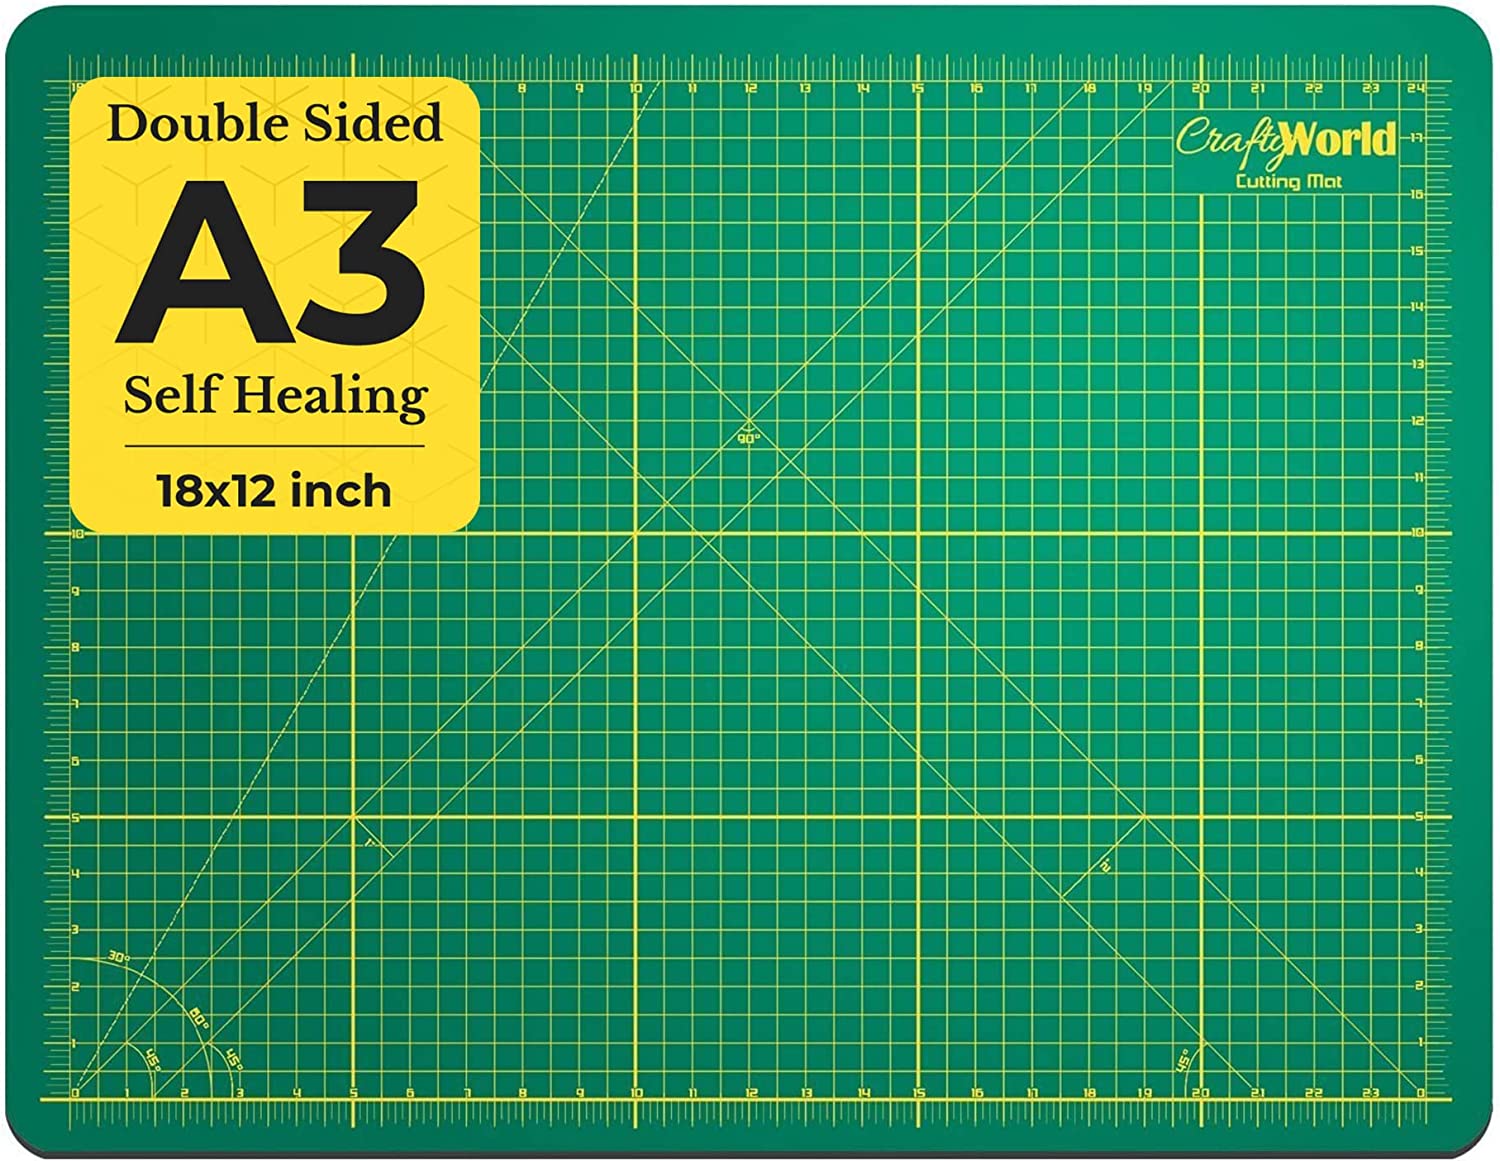 Crafty World Double-Sided Self Healing Rotary Cutting Mat